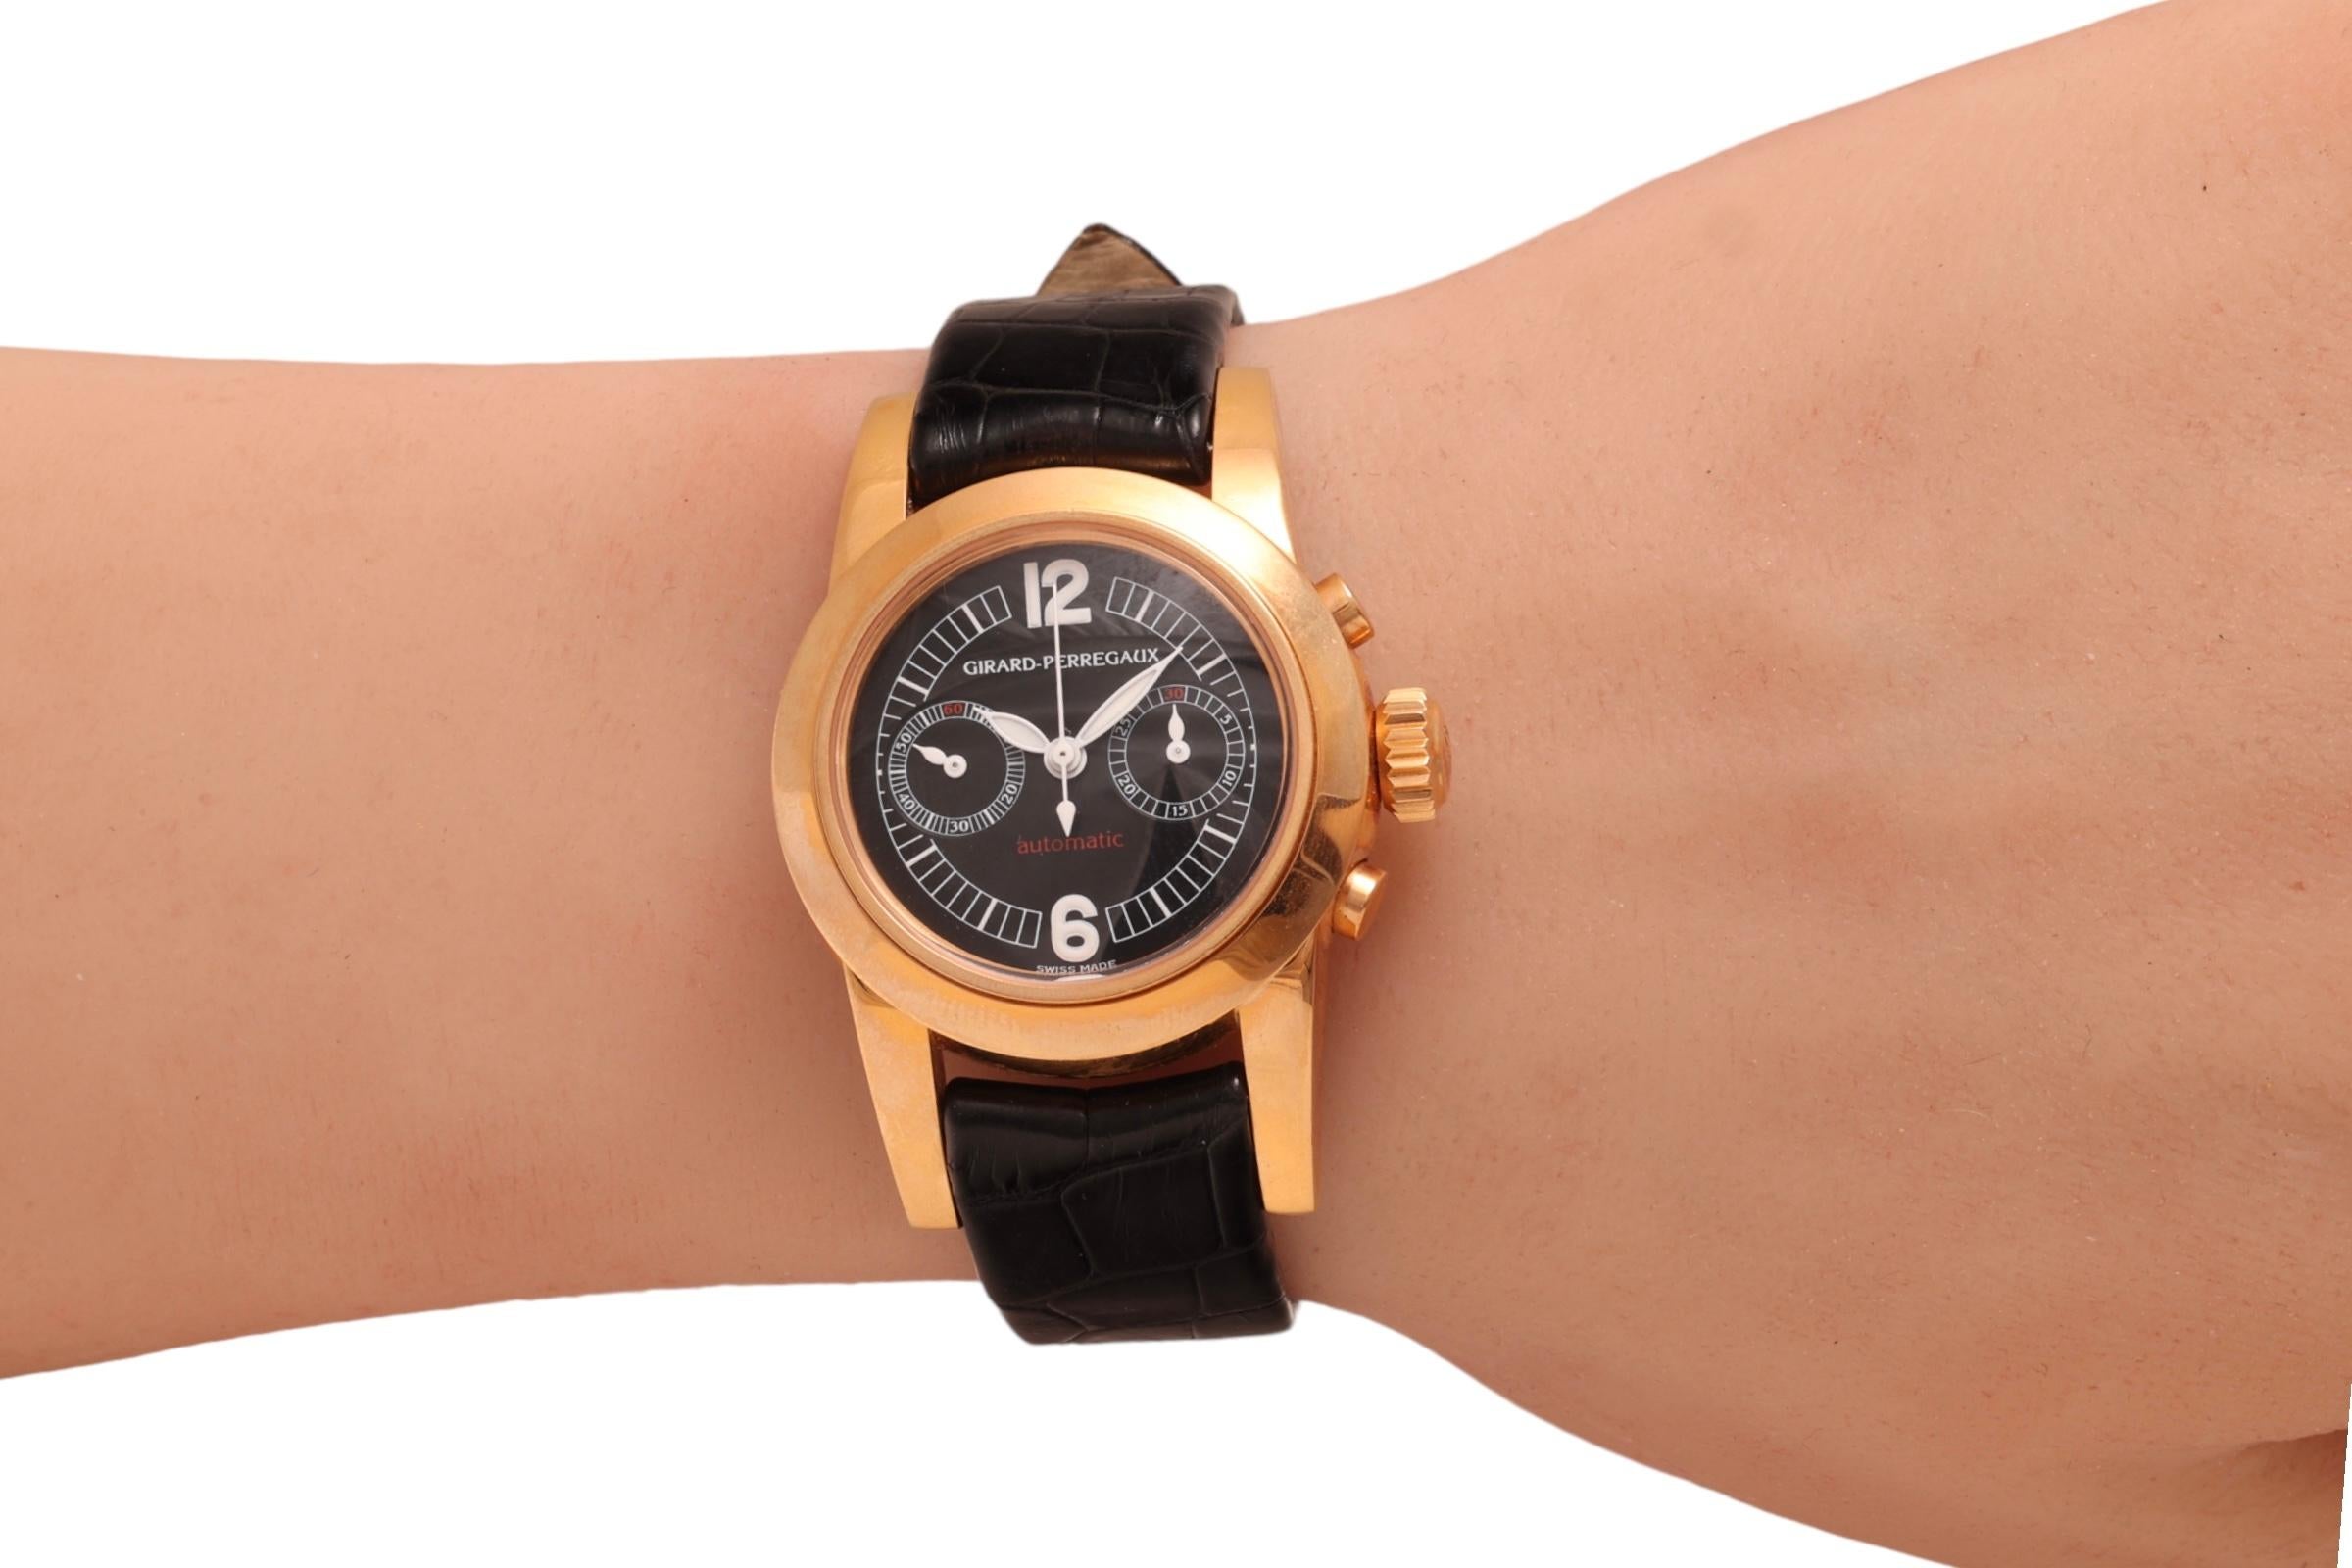 18 Kt Girard Perregaux Chronograph Wrist Watch For Sale 2